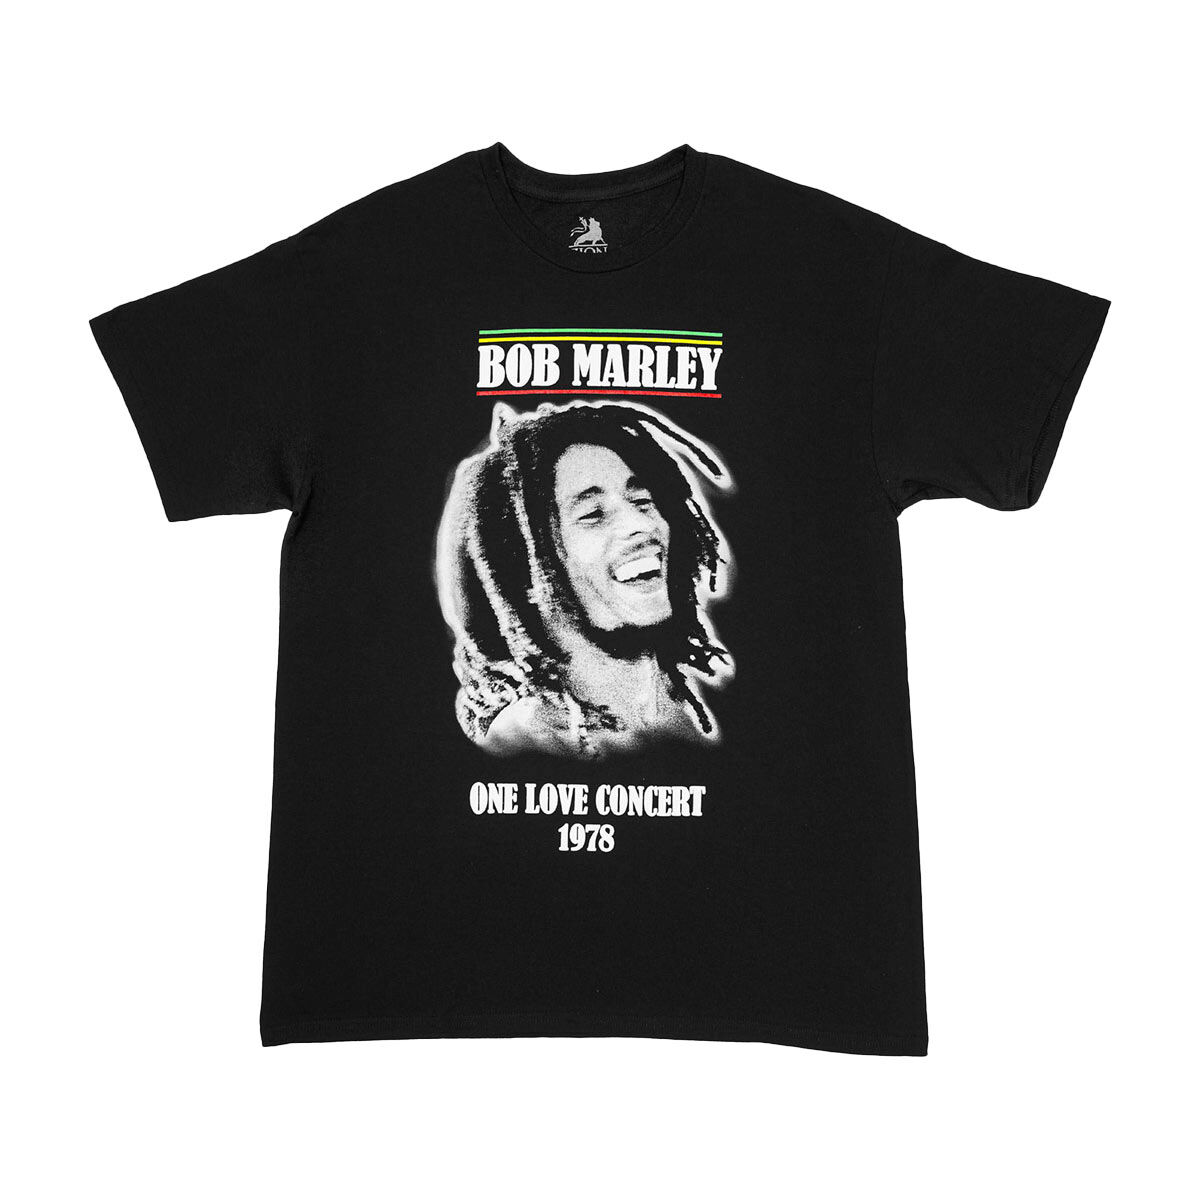 Bob Marley Adult Fit 1978 World Tour Tee Black